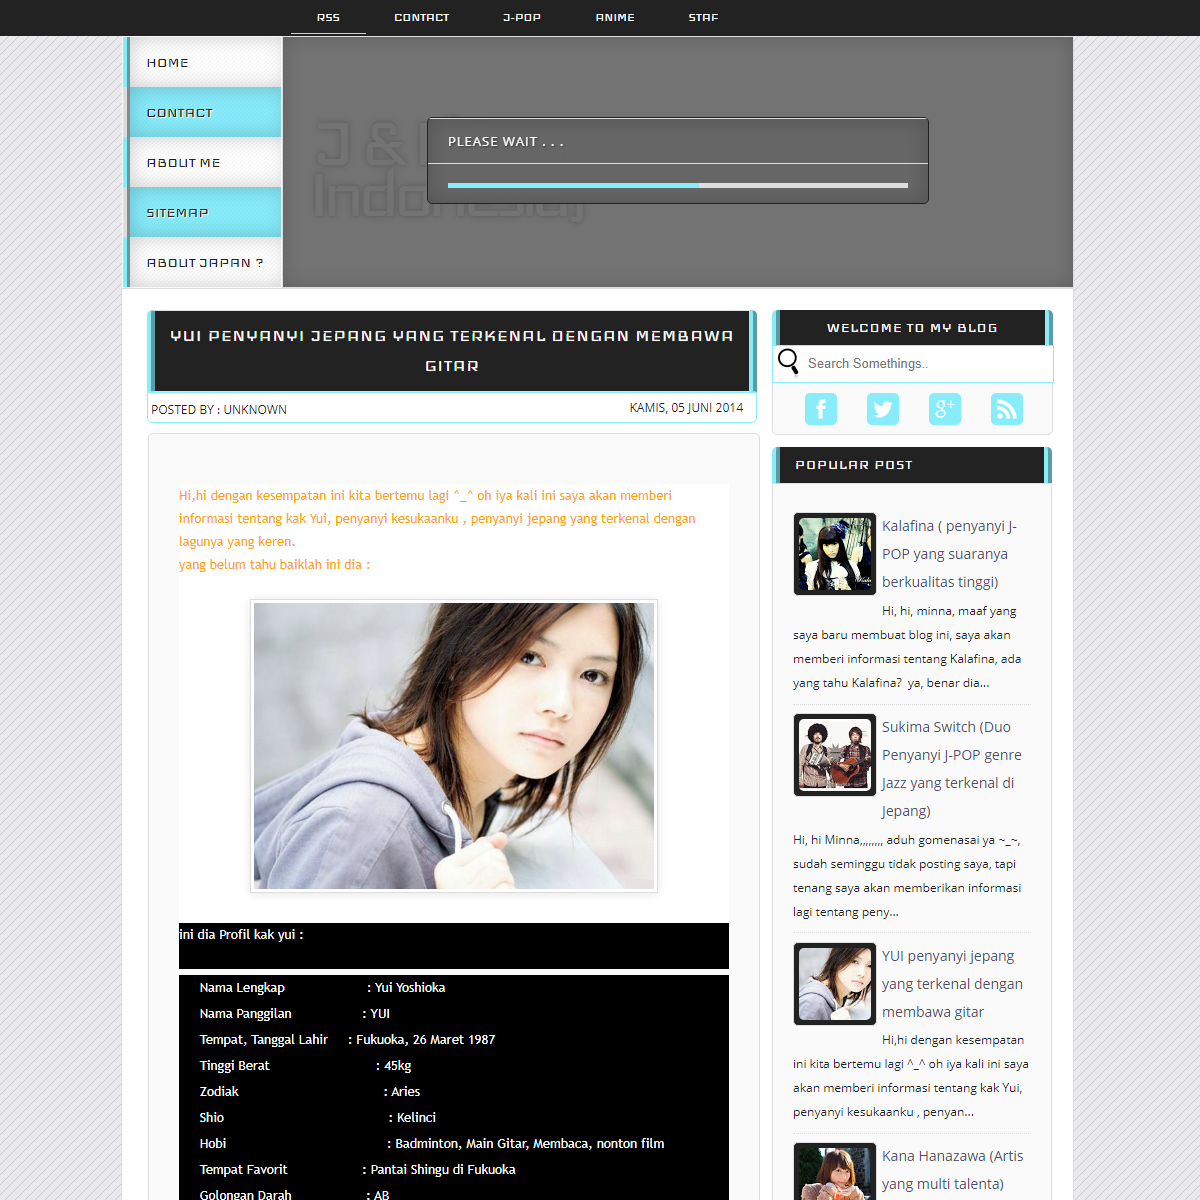 A complete backup of https://japandanindo.blogspot.com/2014/05/yui-penyanyi-jepang-yang-terkenal.html